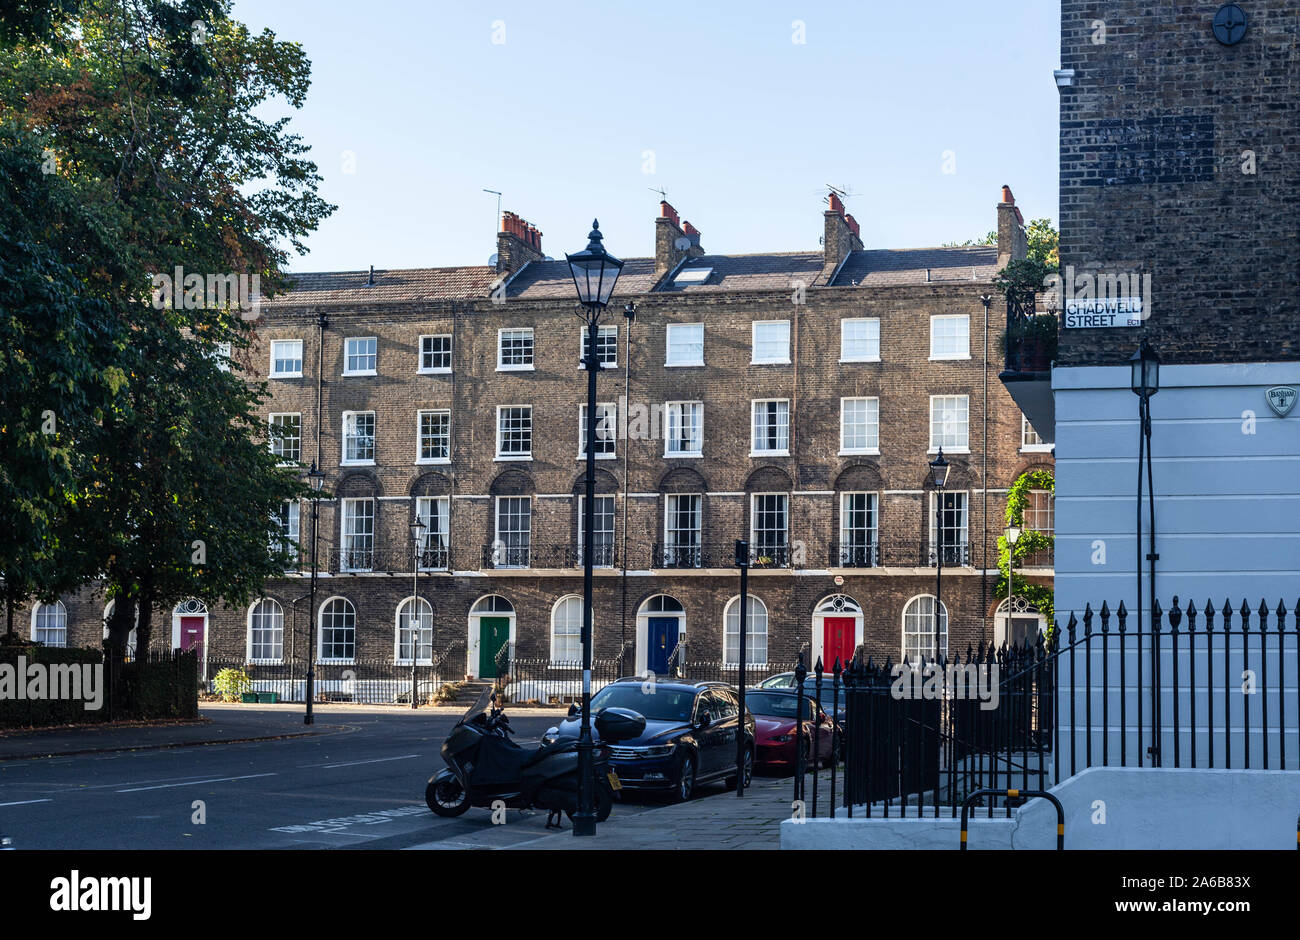 Bloc d'appartements sur Myddelton Square vu de Chadwell Street, Clerkenwell, Londres EC1, Angleterre, Royaume-Uni. Banque D'Images